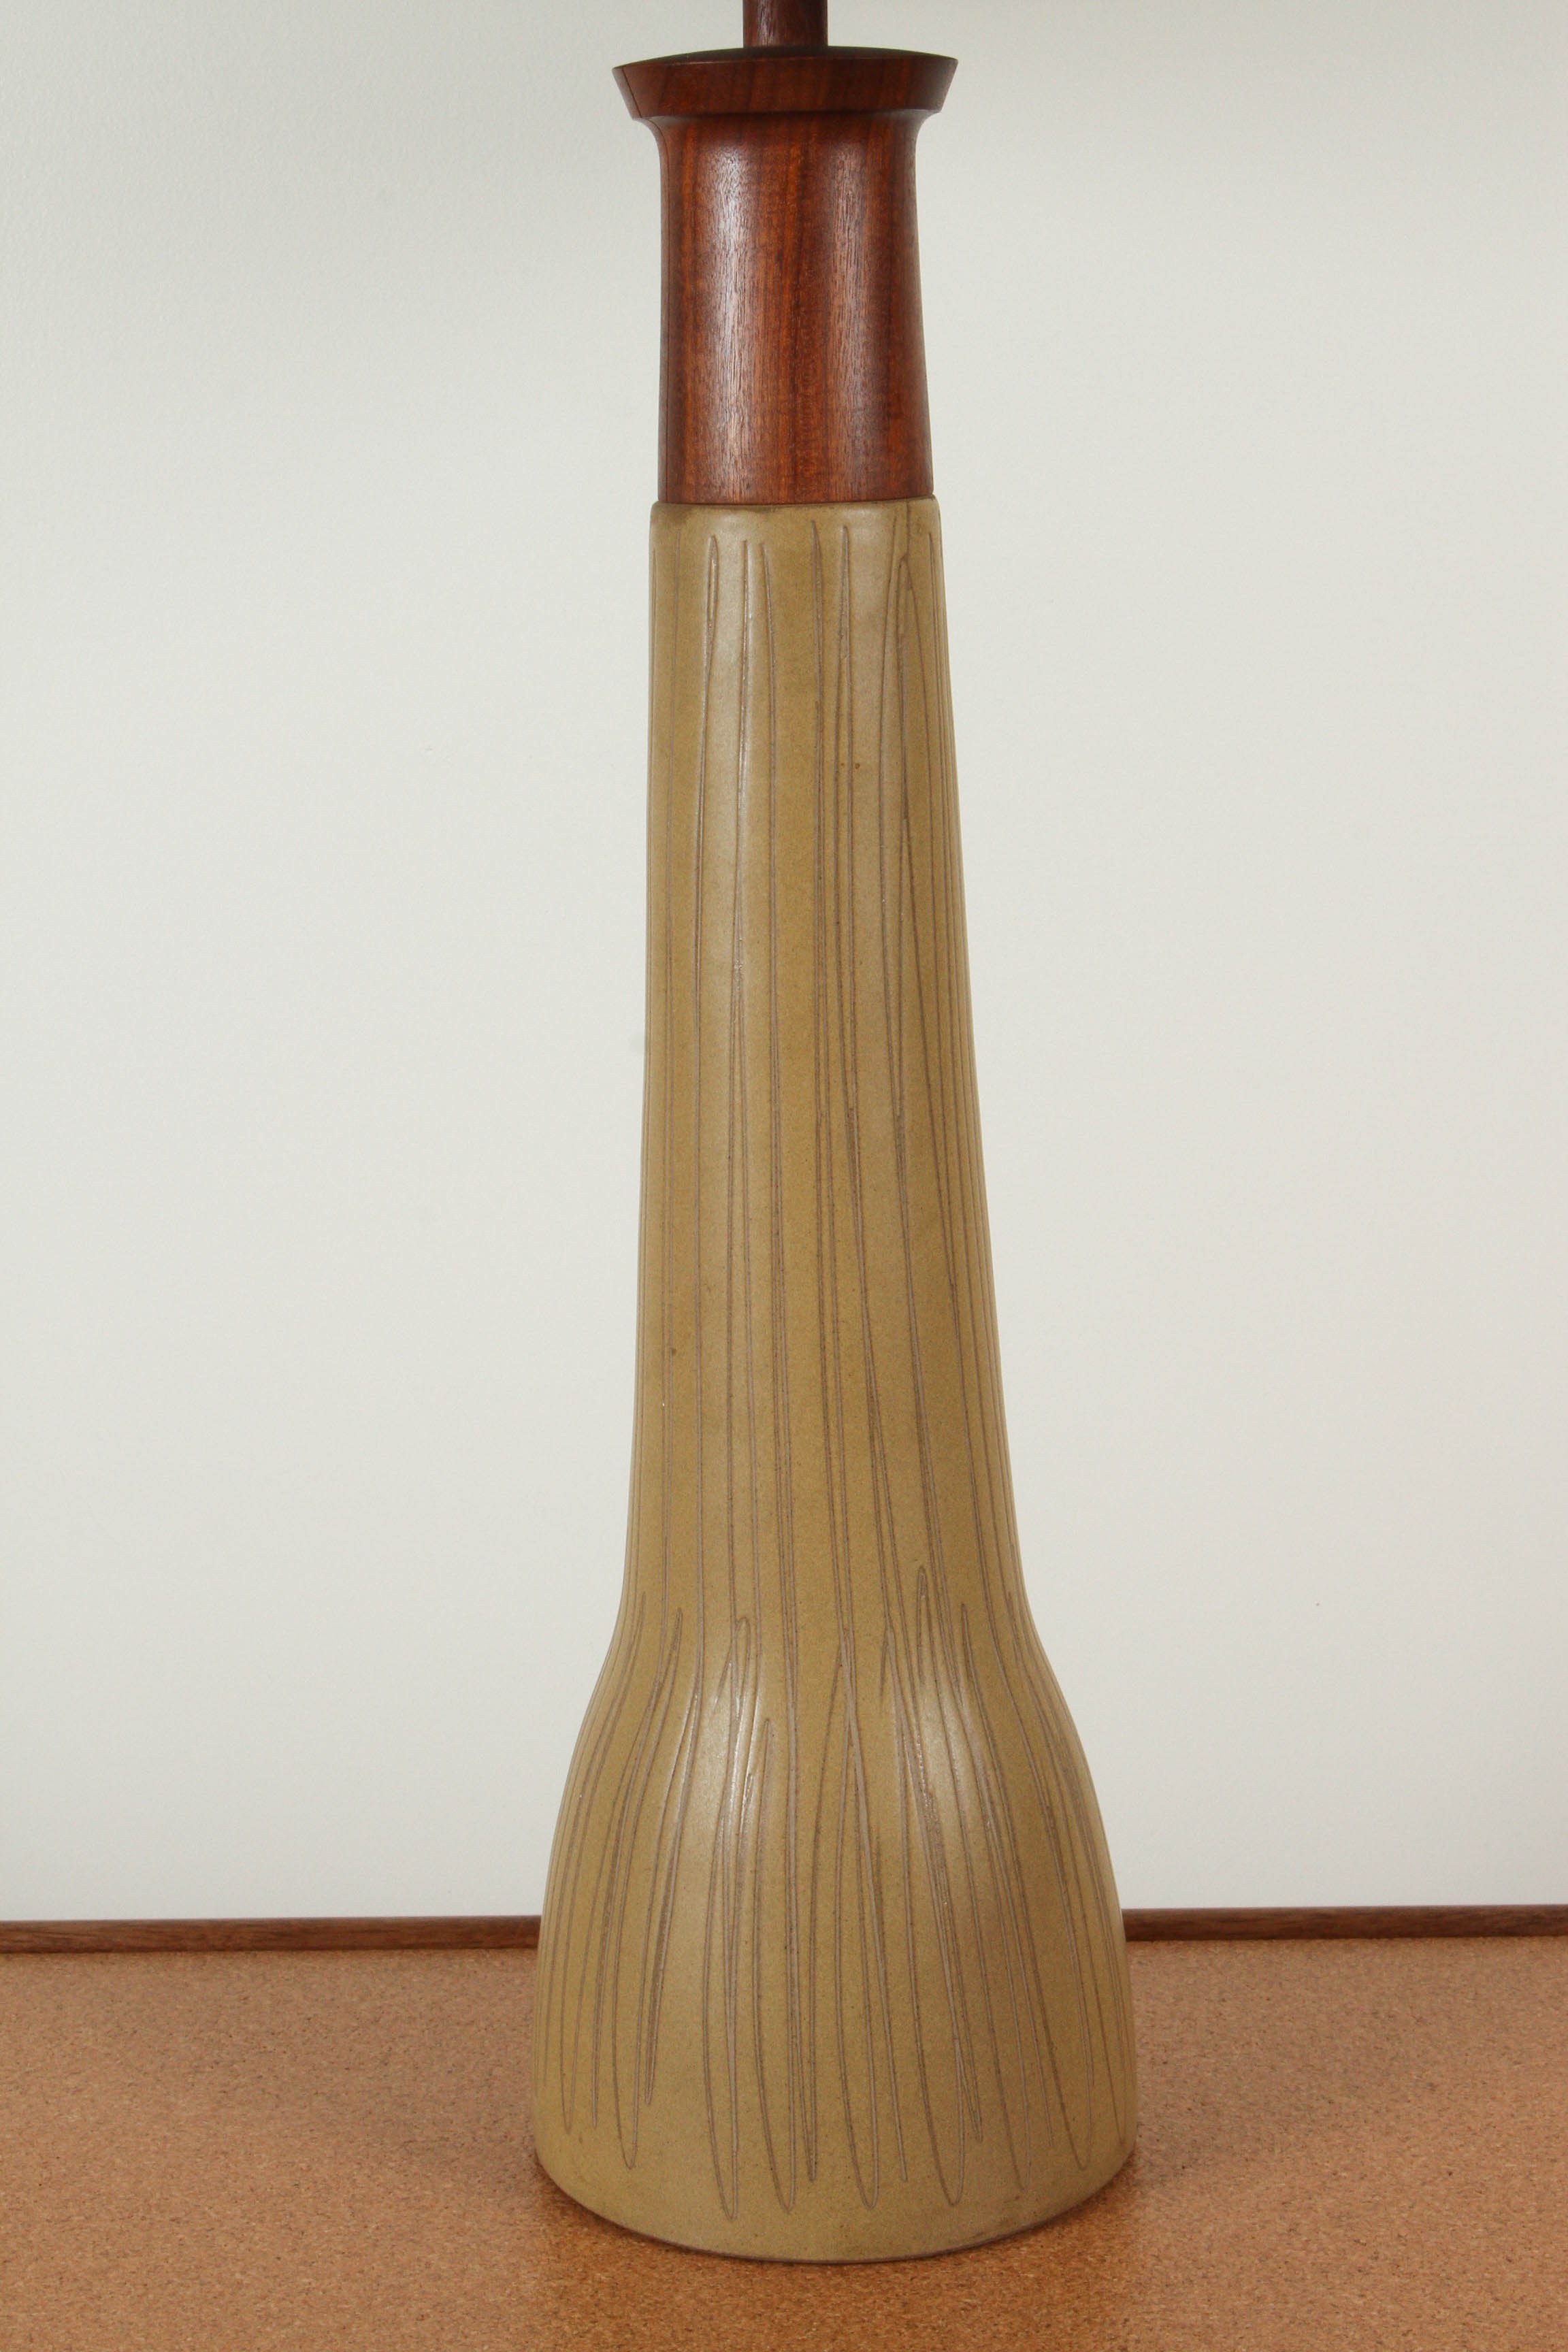 American Tall Ochre Sgraffito Glazed Ceramic Matrz Lamp 